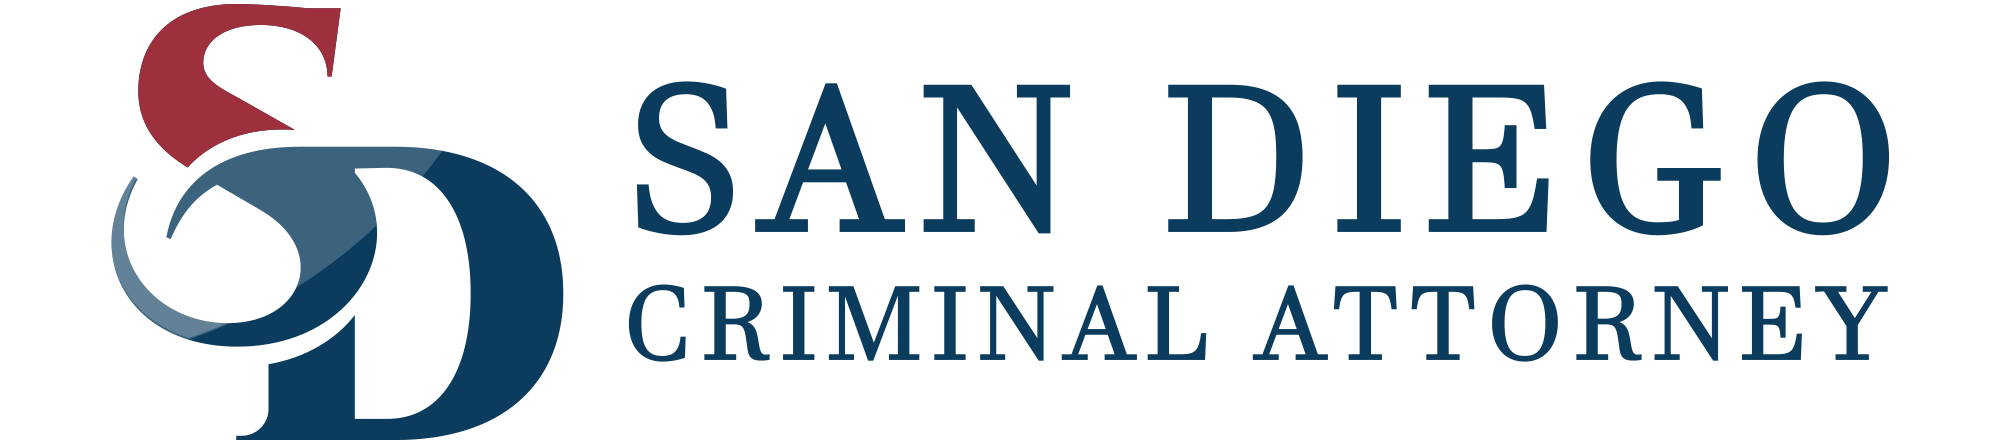 San Diego Criminal Attorney logo